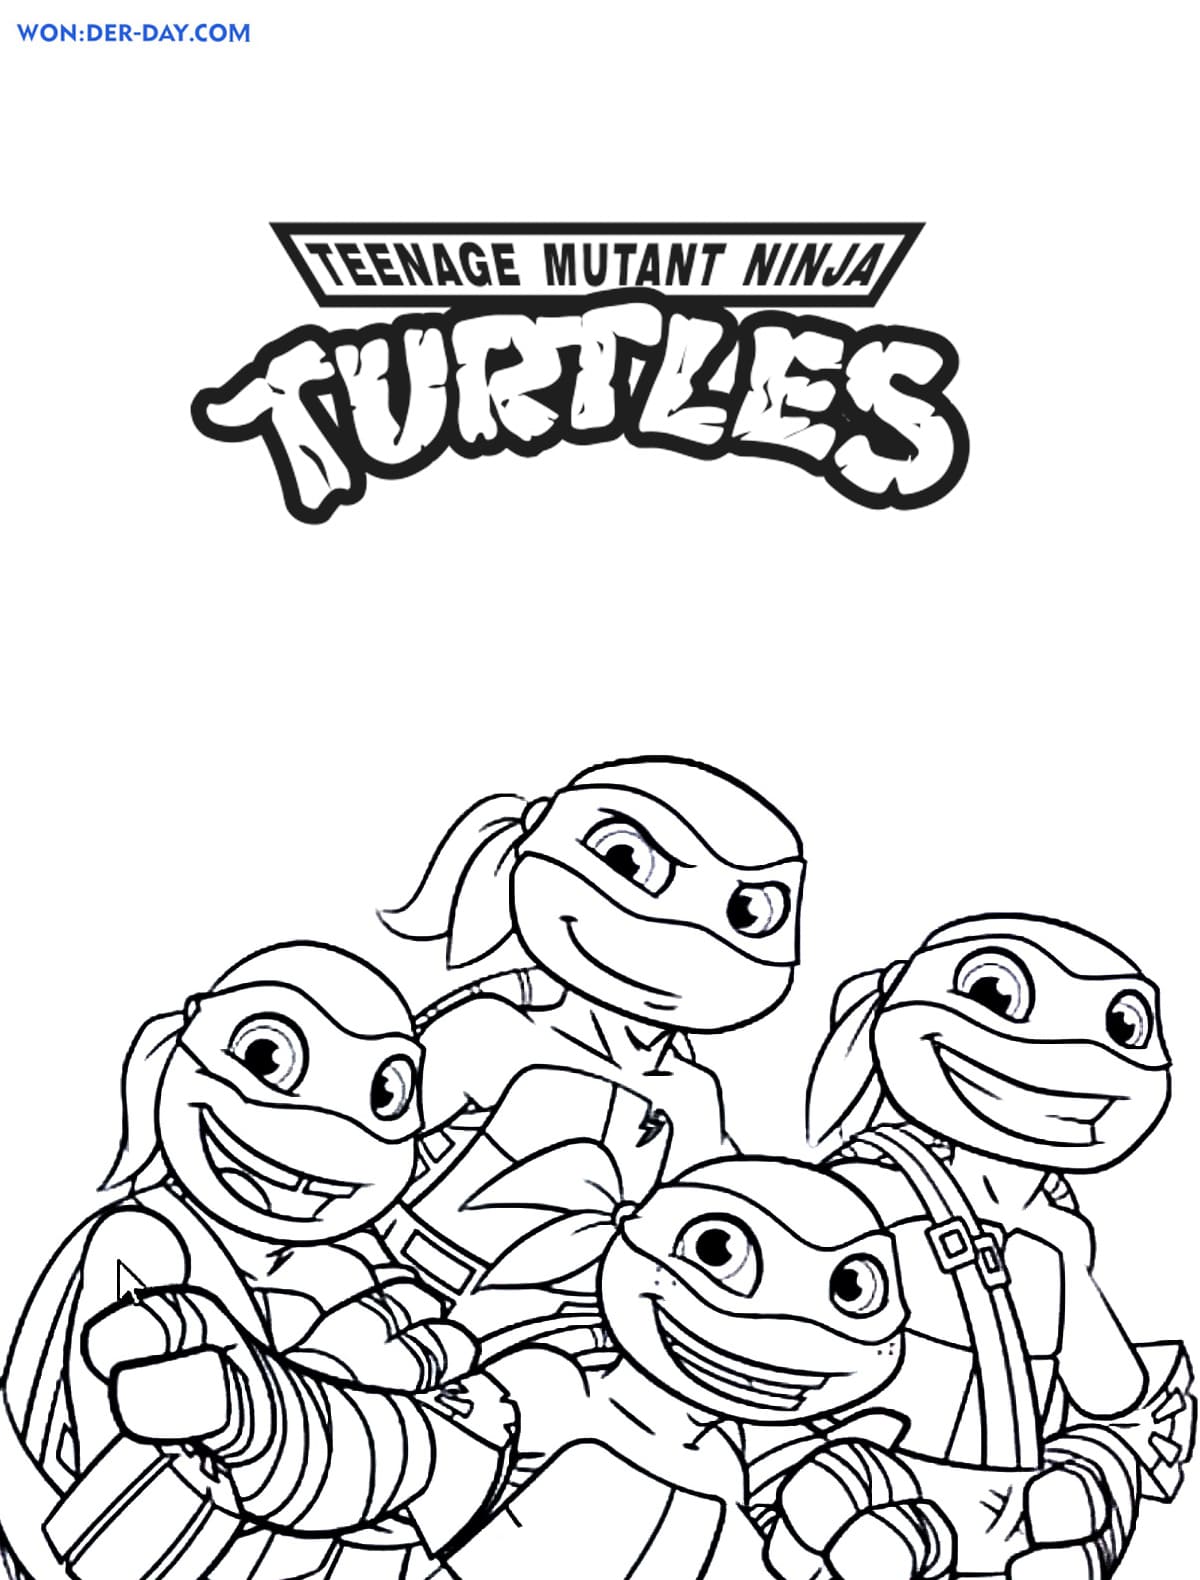 Teenage Mutant Ninja Turtles coloring pages — Wonder-day.com